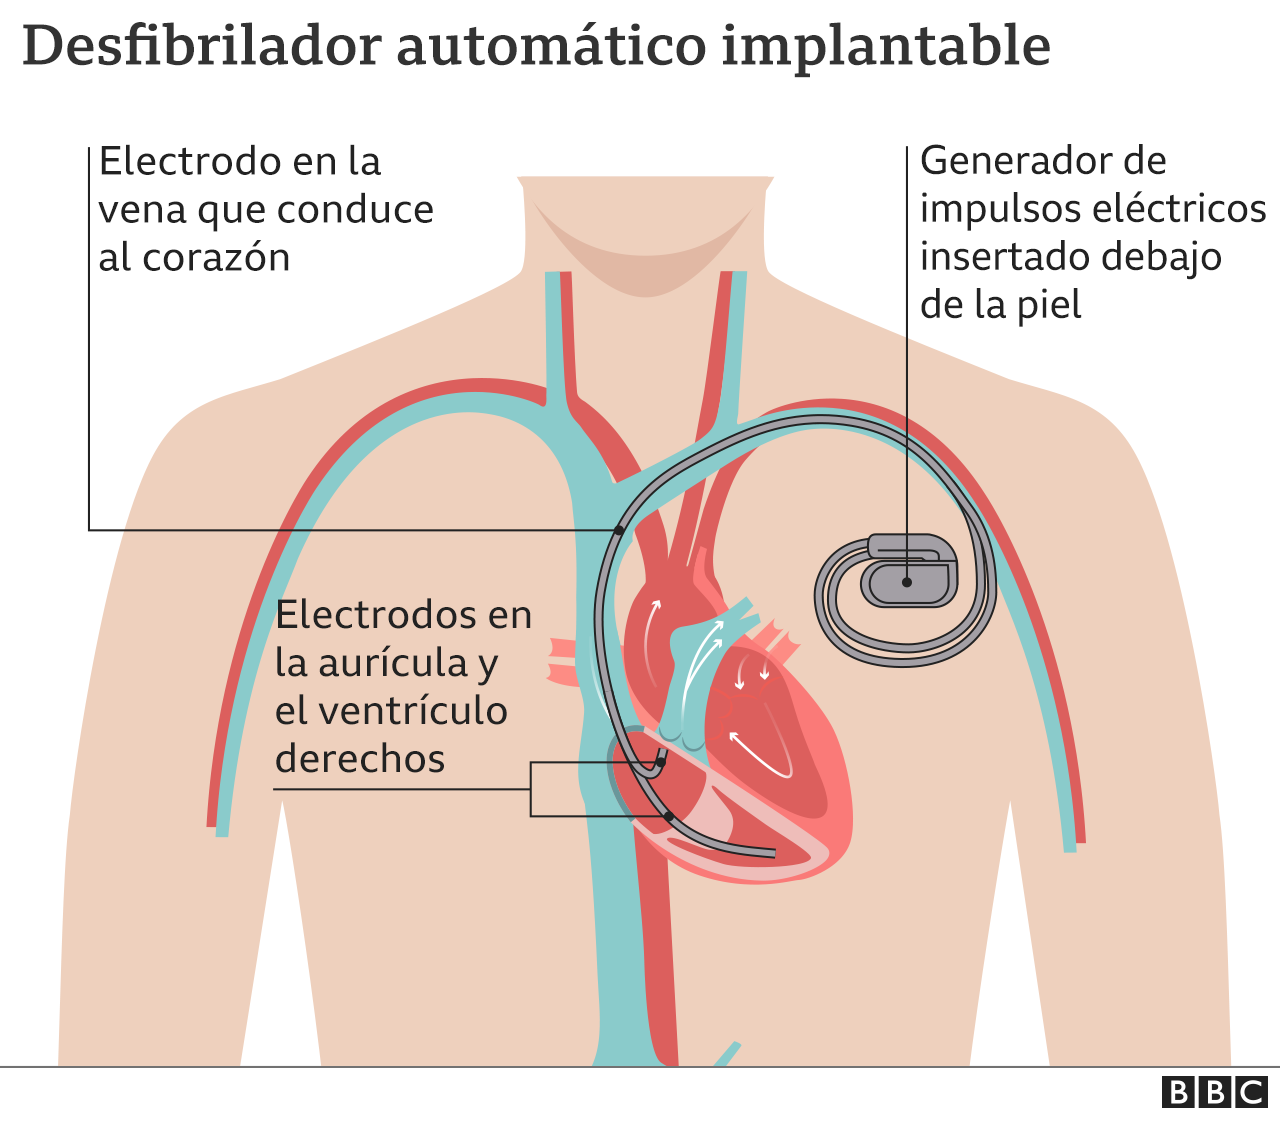 Implantable cardioverter defibrillator graphic, also called implantable cardioverter defibrillator.